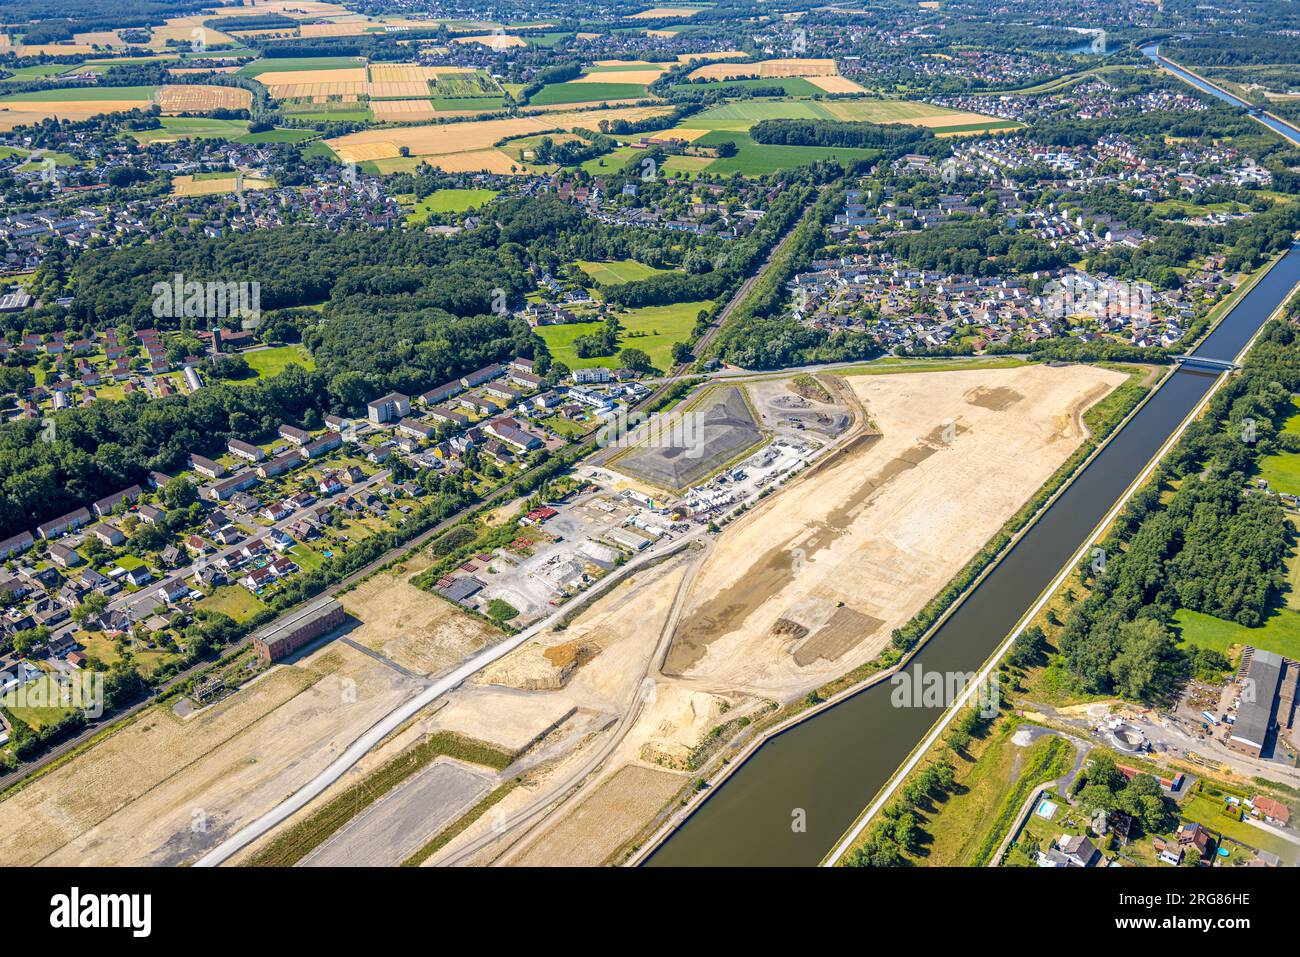 Aerial view, Wasserstadt Aden at Datteln-Hamm canal, construction area for planned city quarter, Weddinghofen, Bergkamen, Ruhr area, North Rhine-Westp Stock Photo